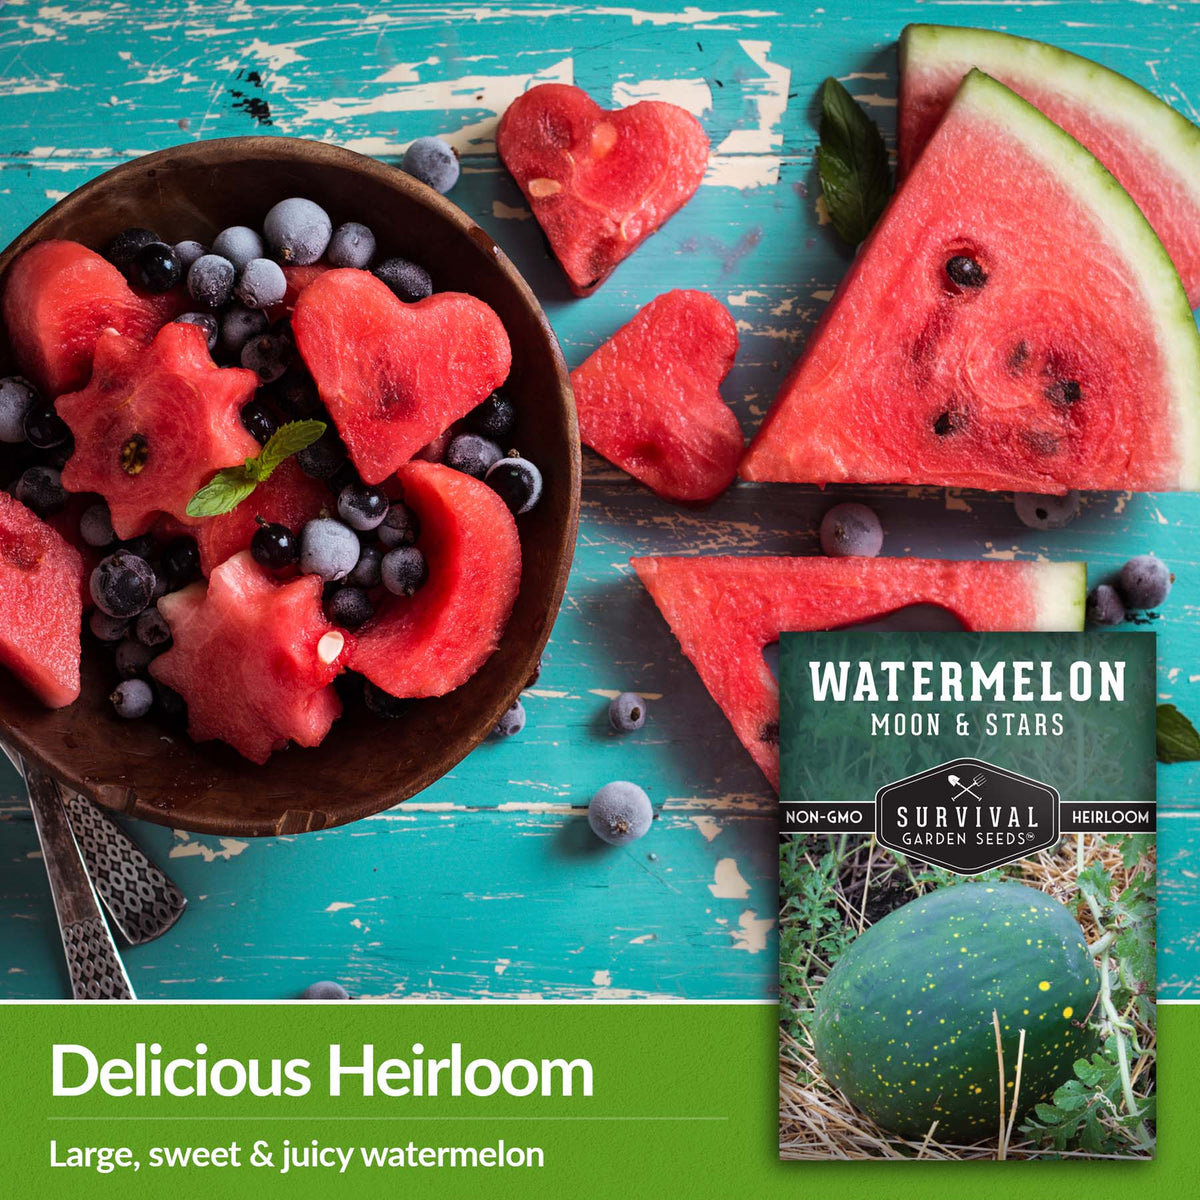 Moon and Stars Watermelon is a sweet, juicy heirloom watermelon